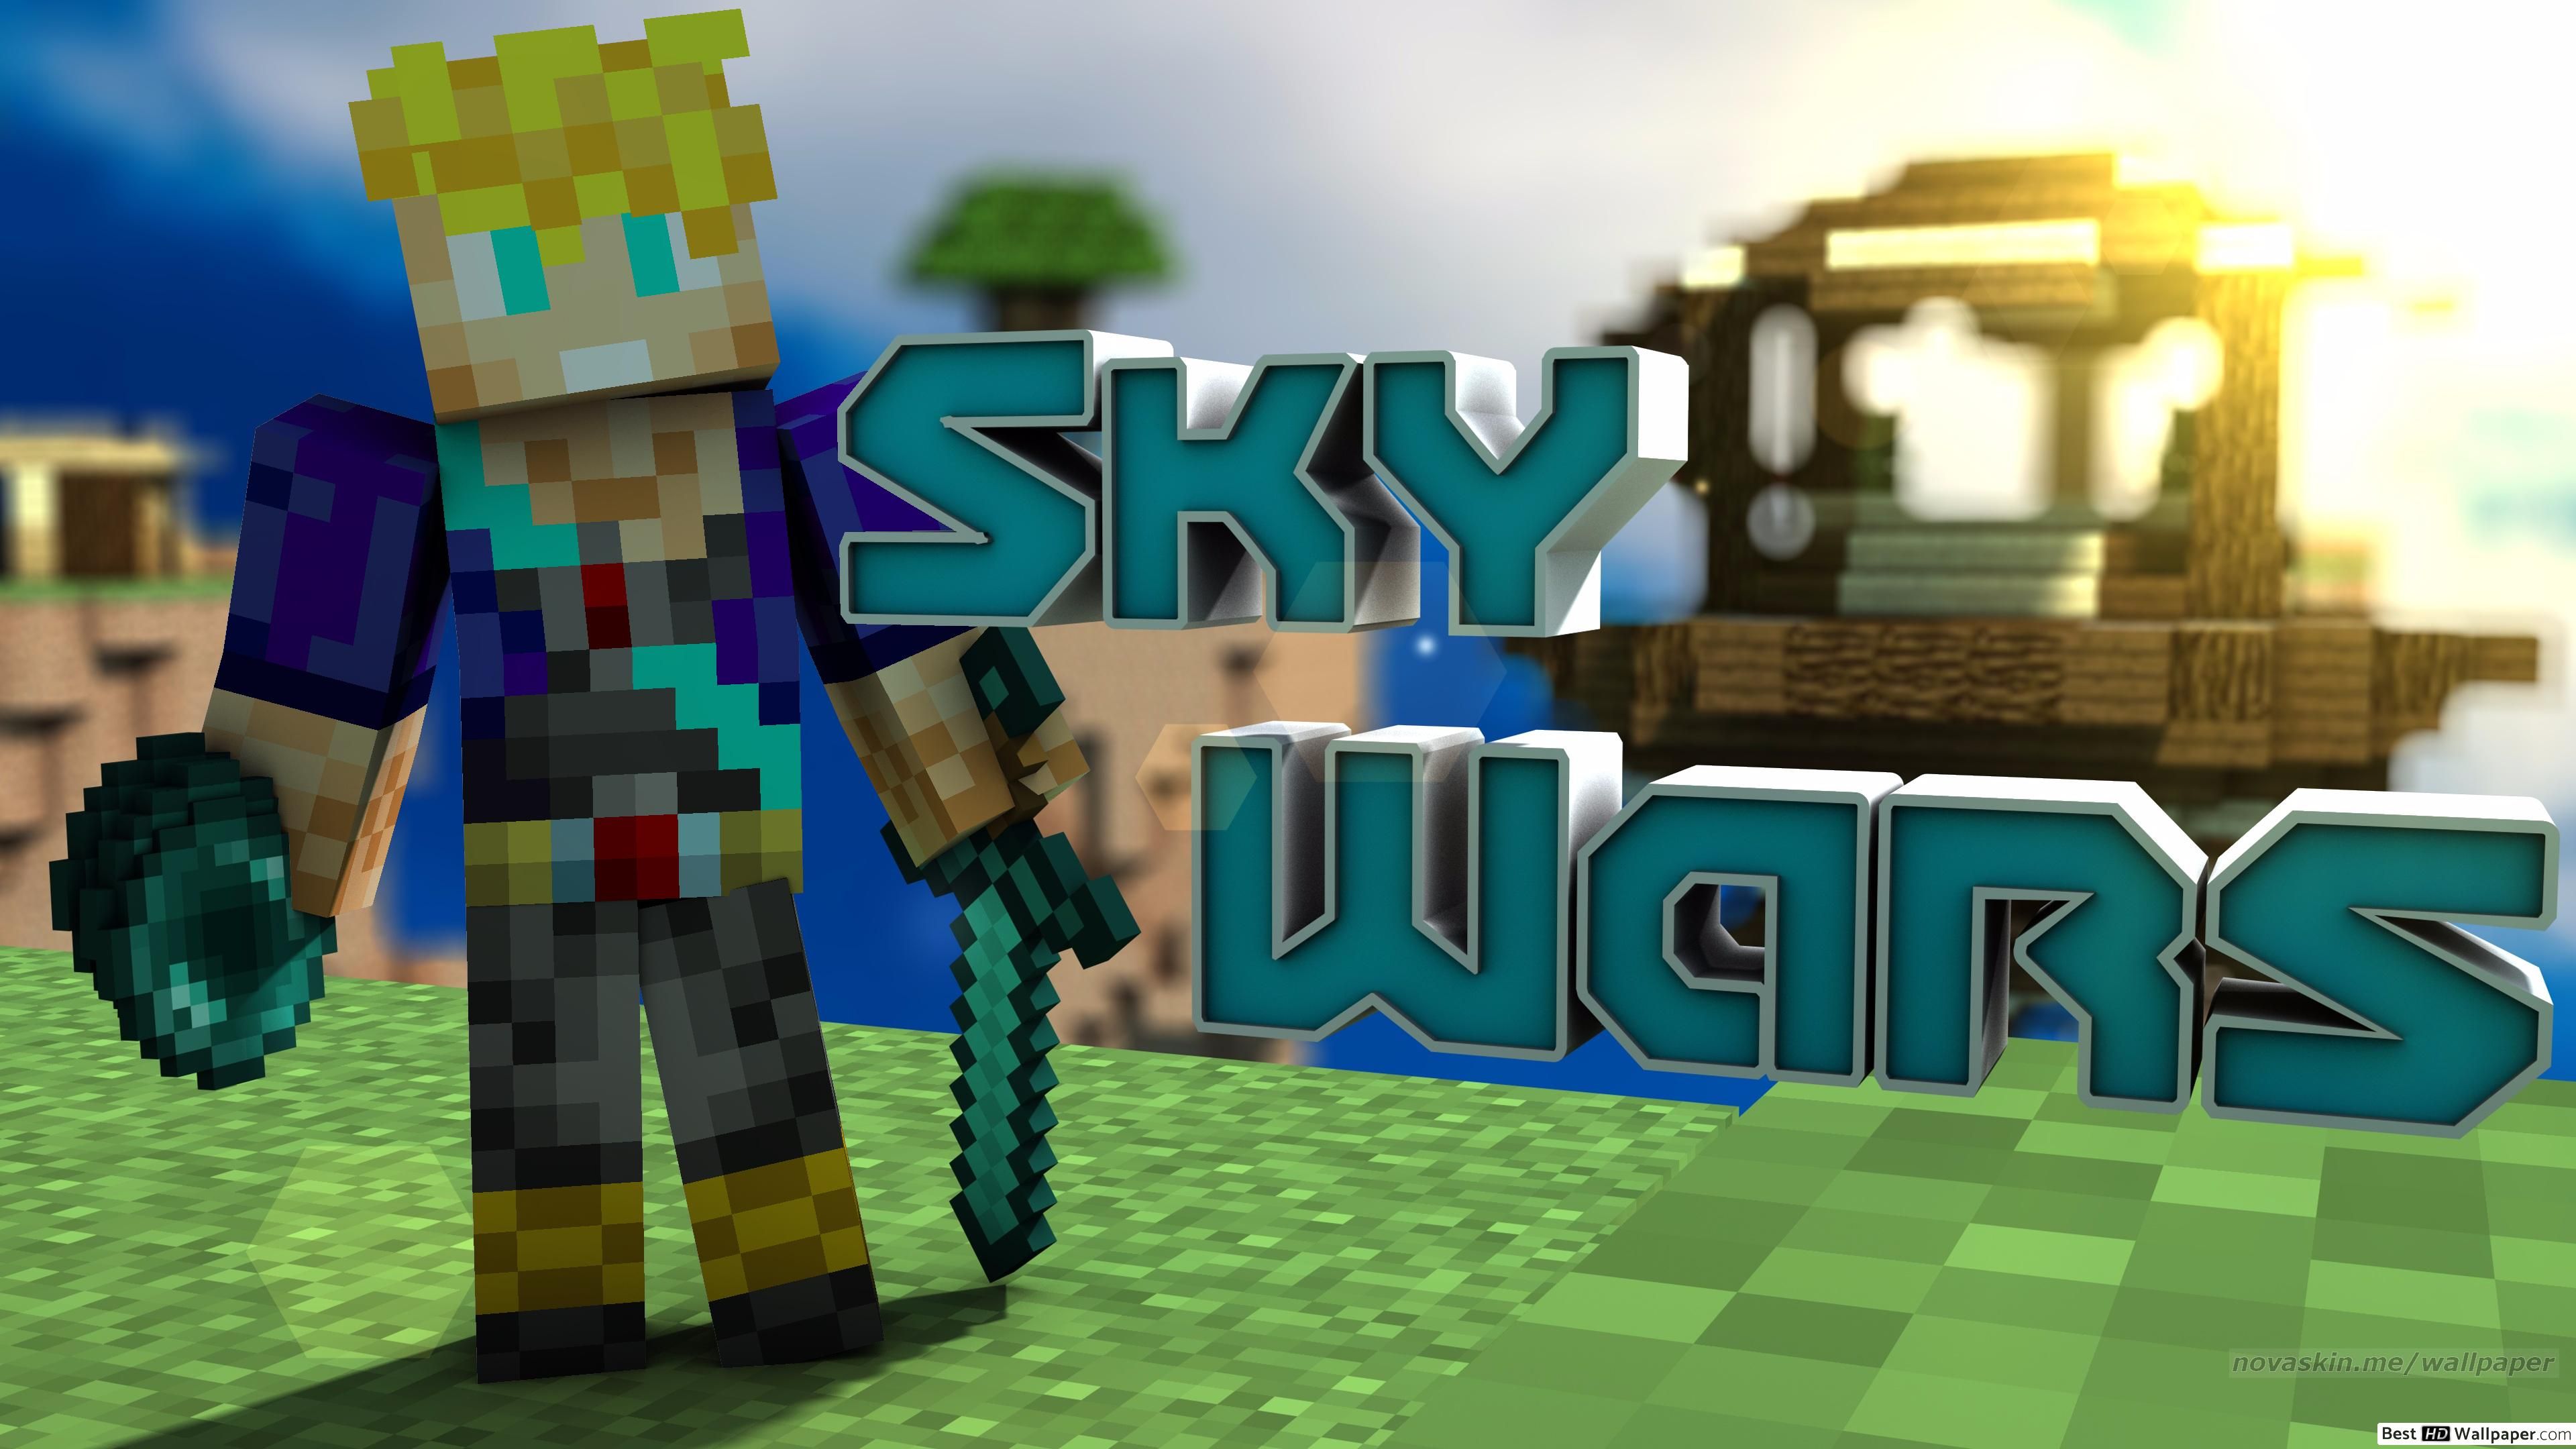 Sky Wars of Minecraft HD wallpaper download